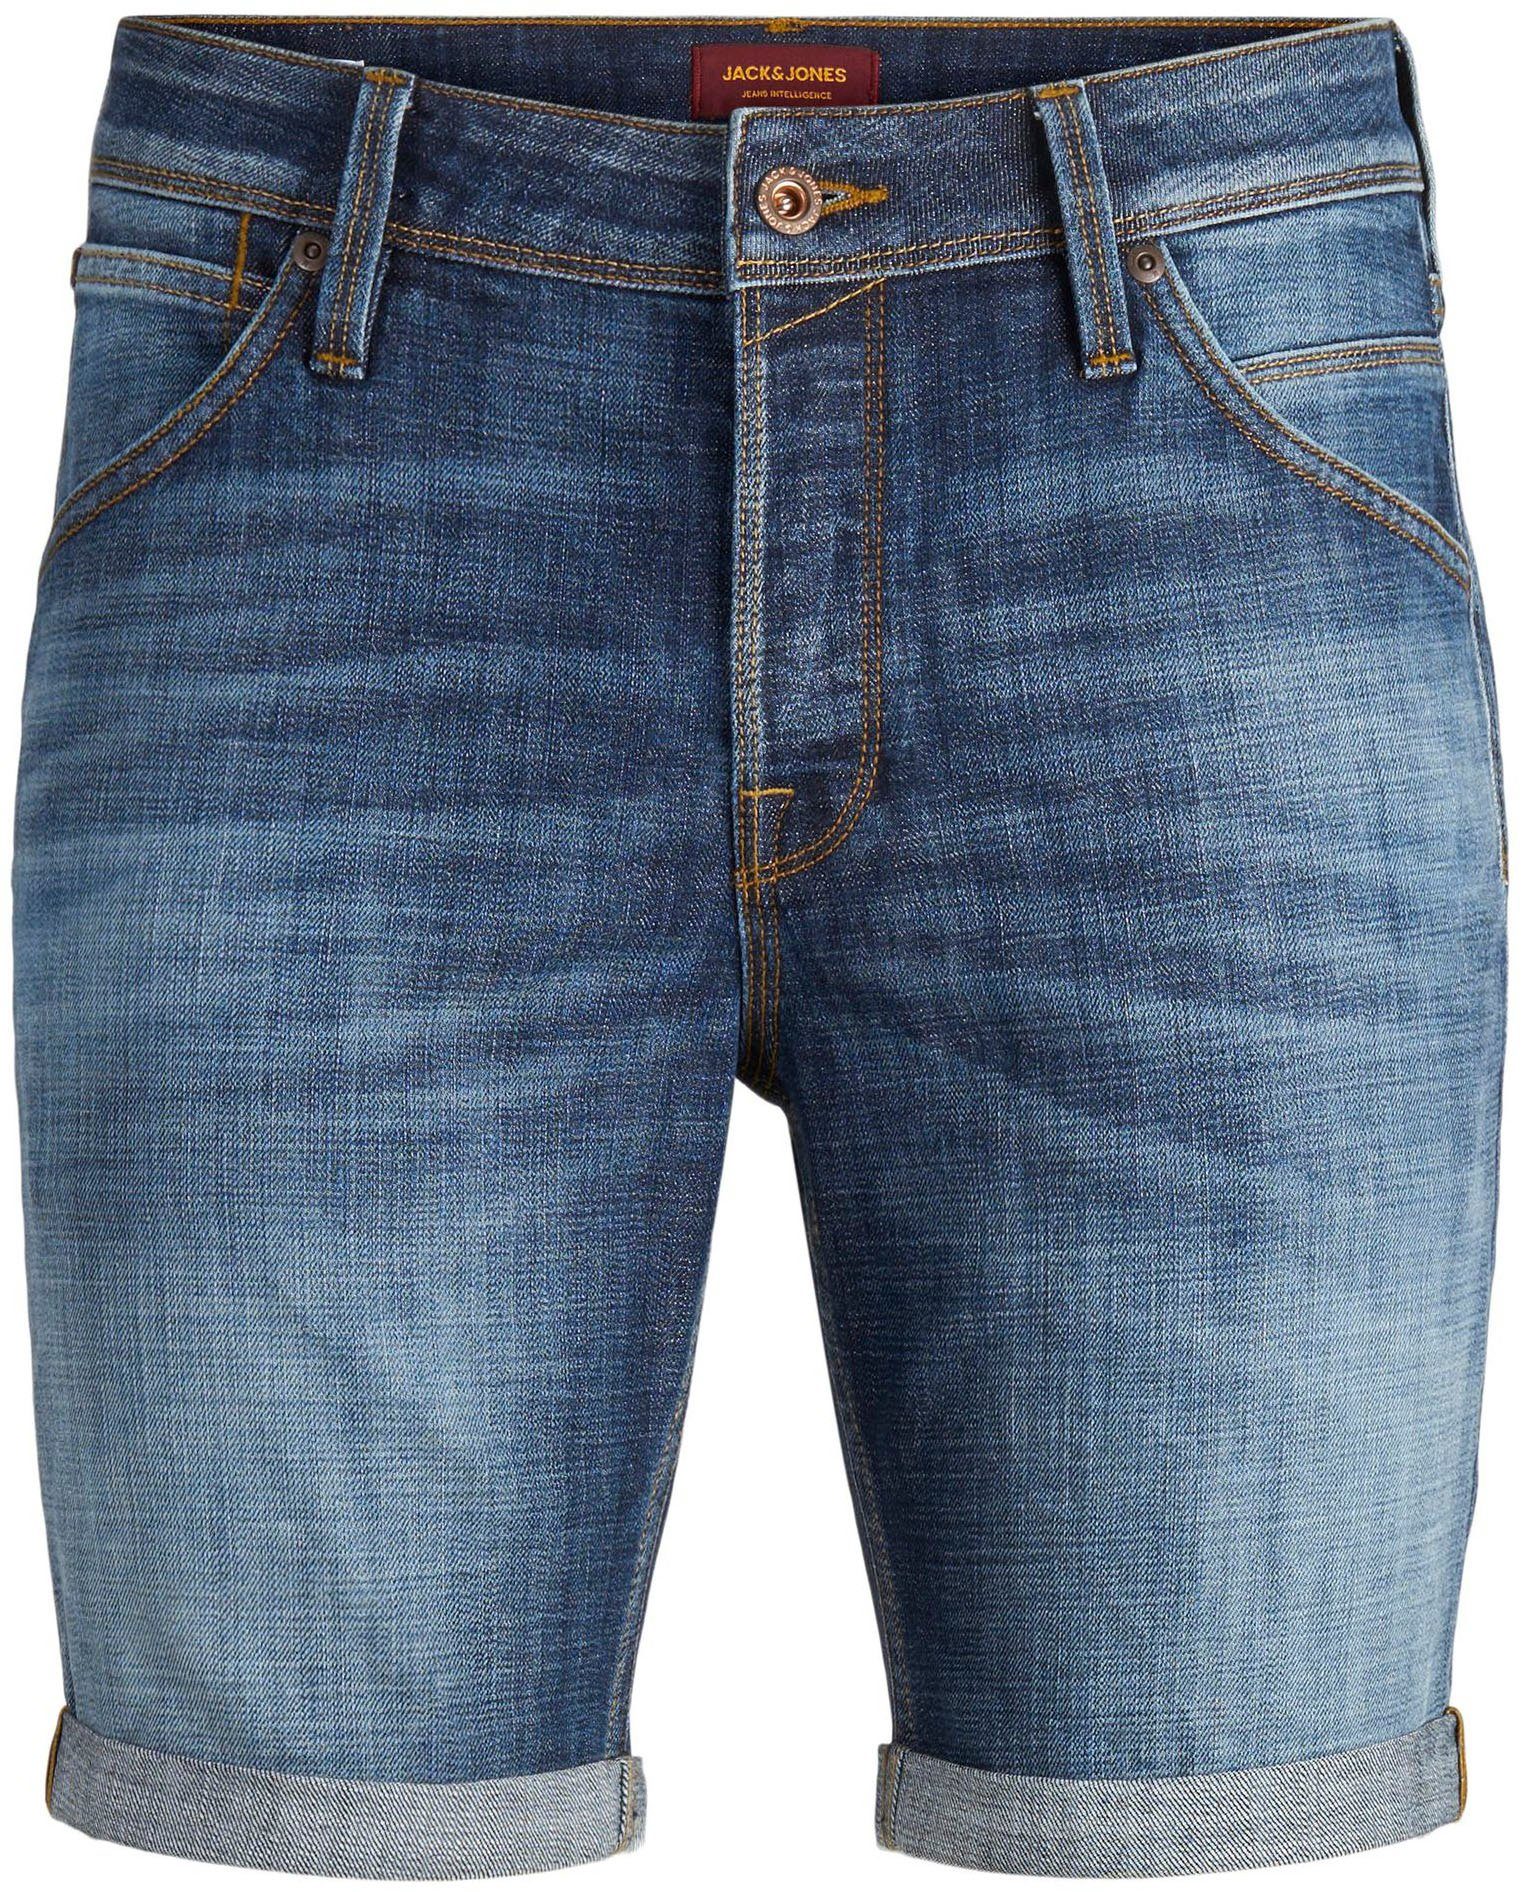 Jack & Jones Jeans Shorts online kaufen | OTTO